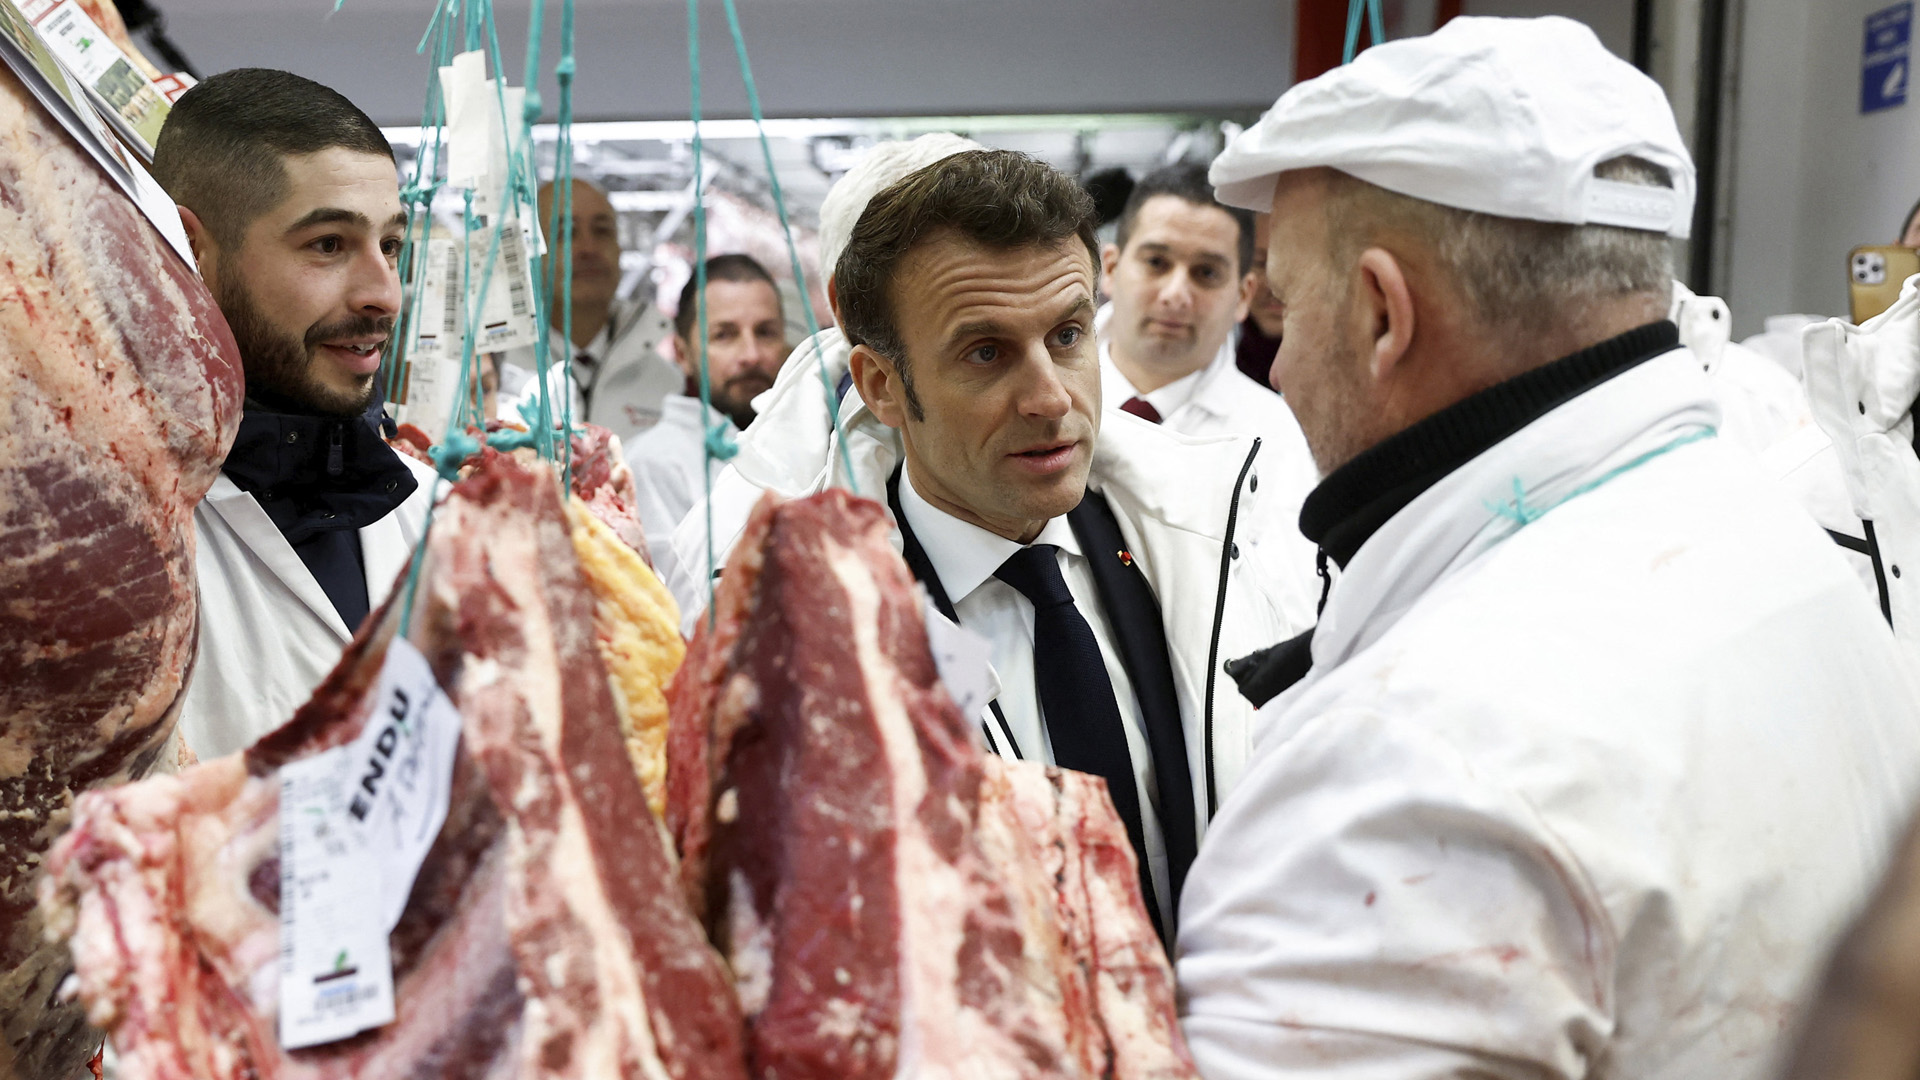 Emmanuel Macron | AP